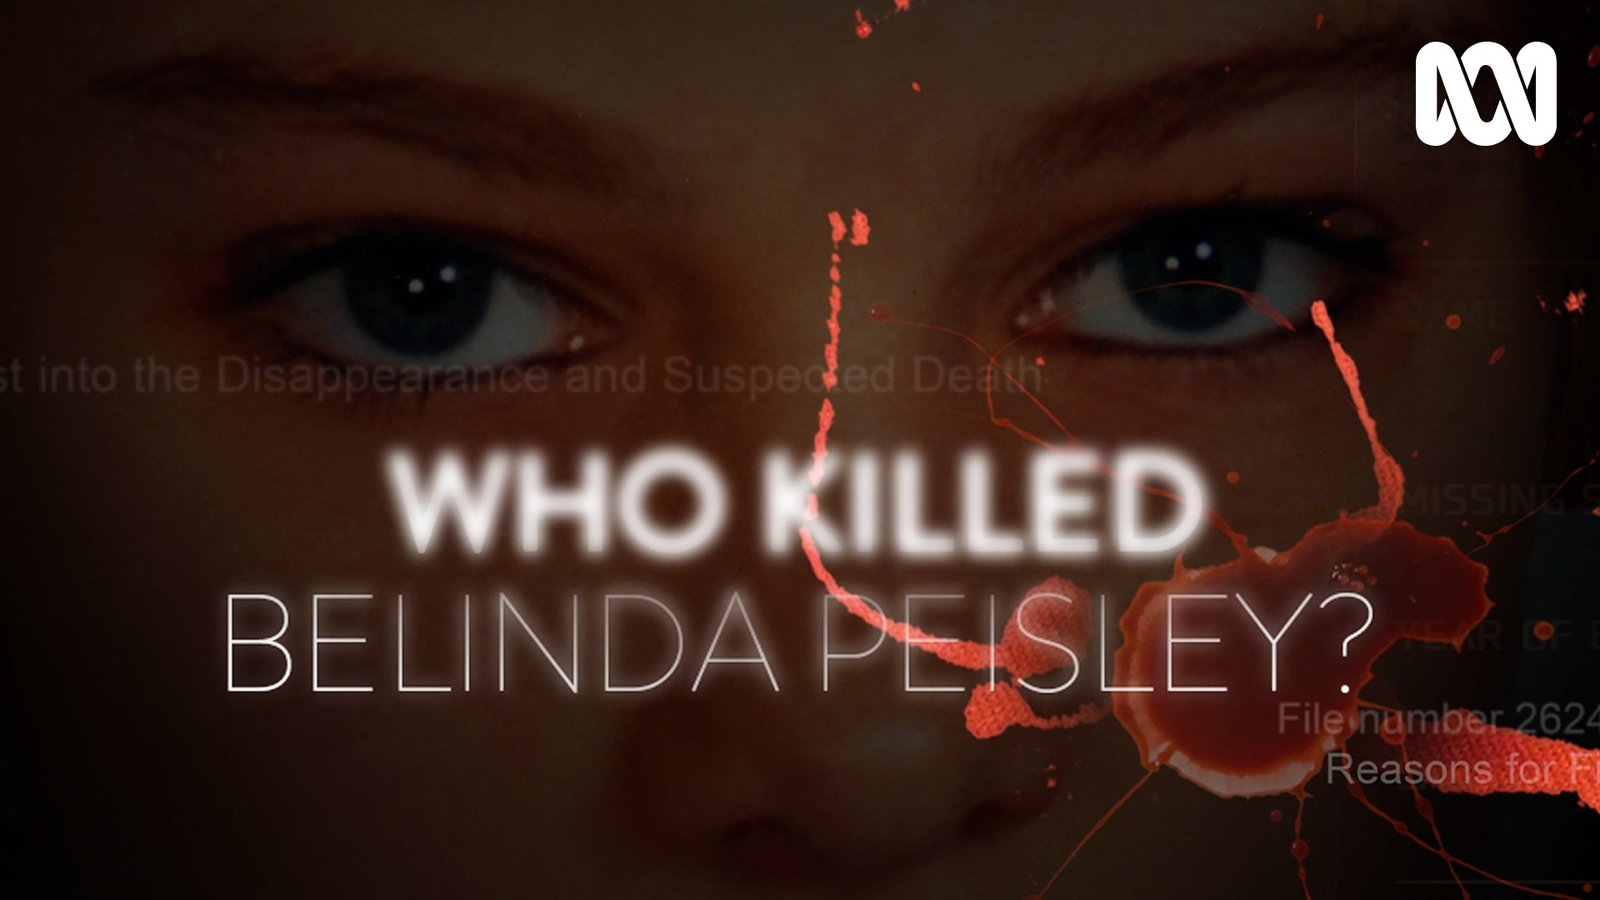 Who Killed Belinda Peisley?